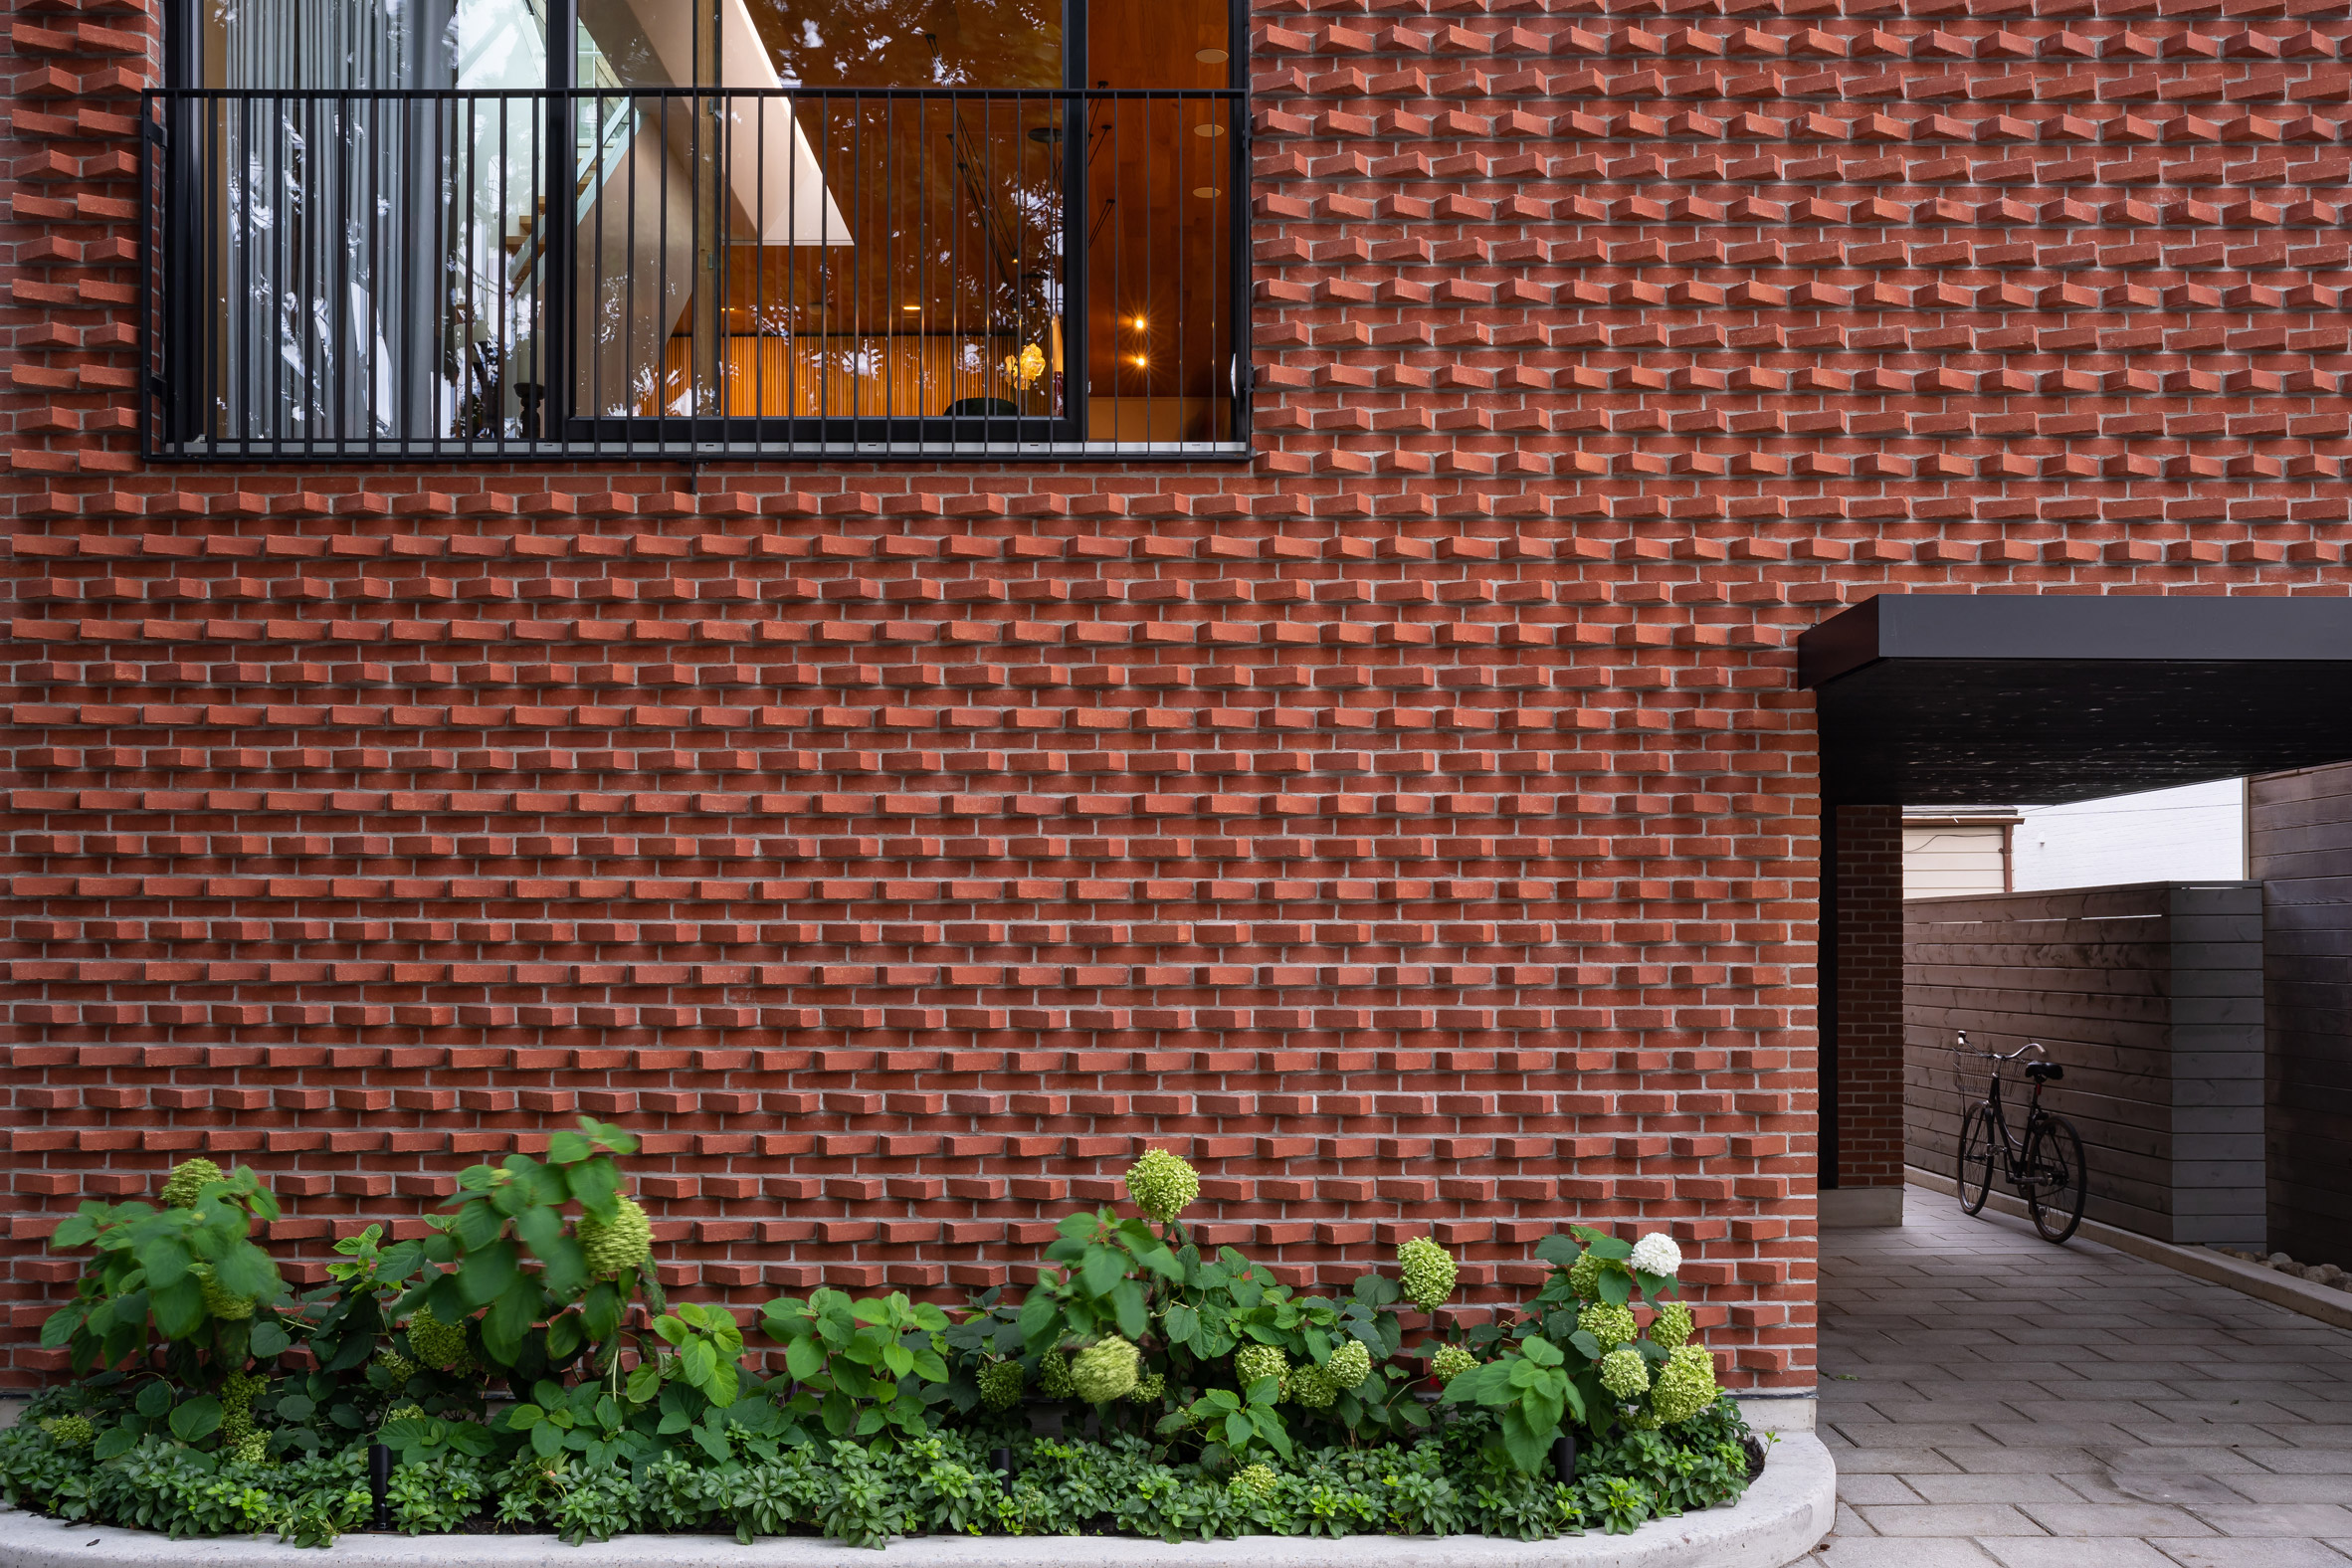 Brick-clad facade of laneway house